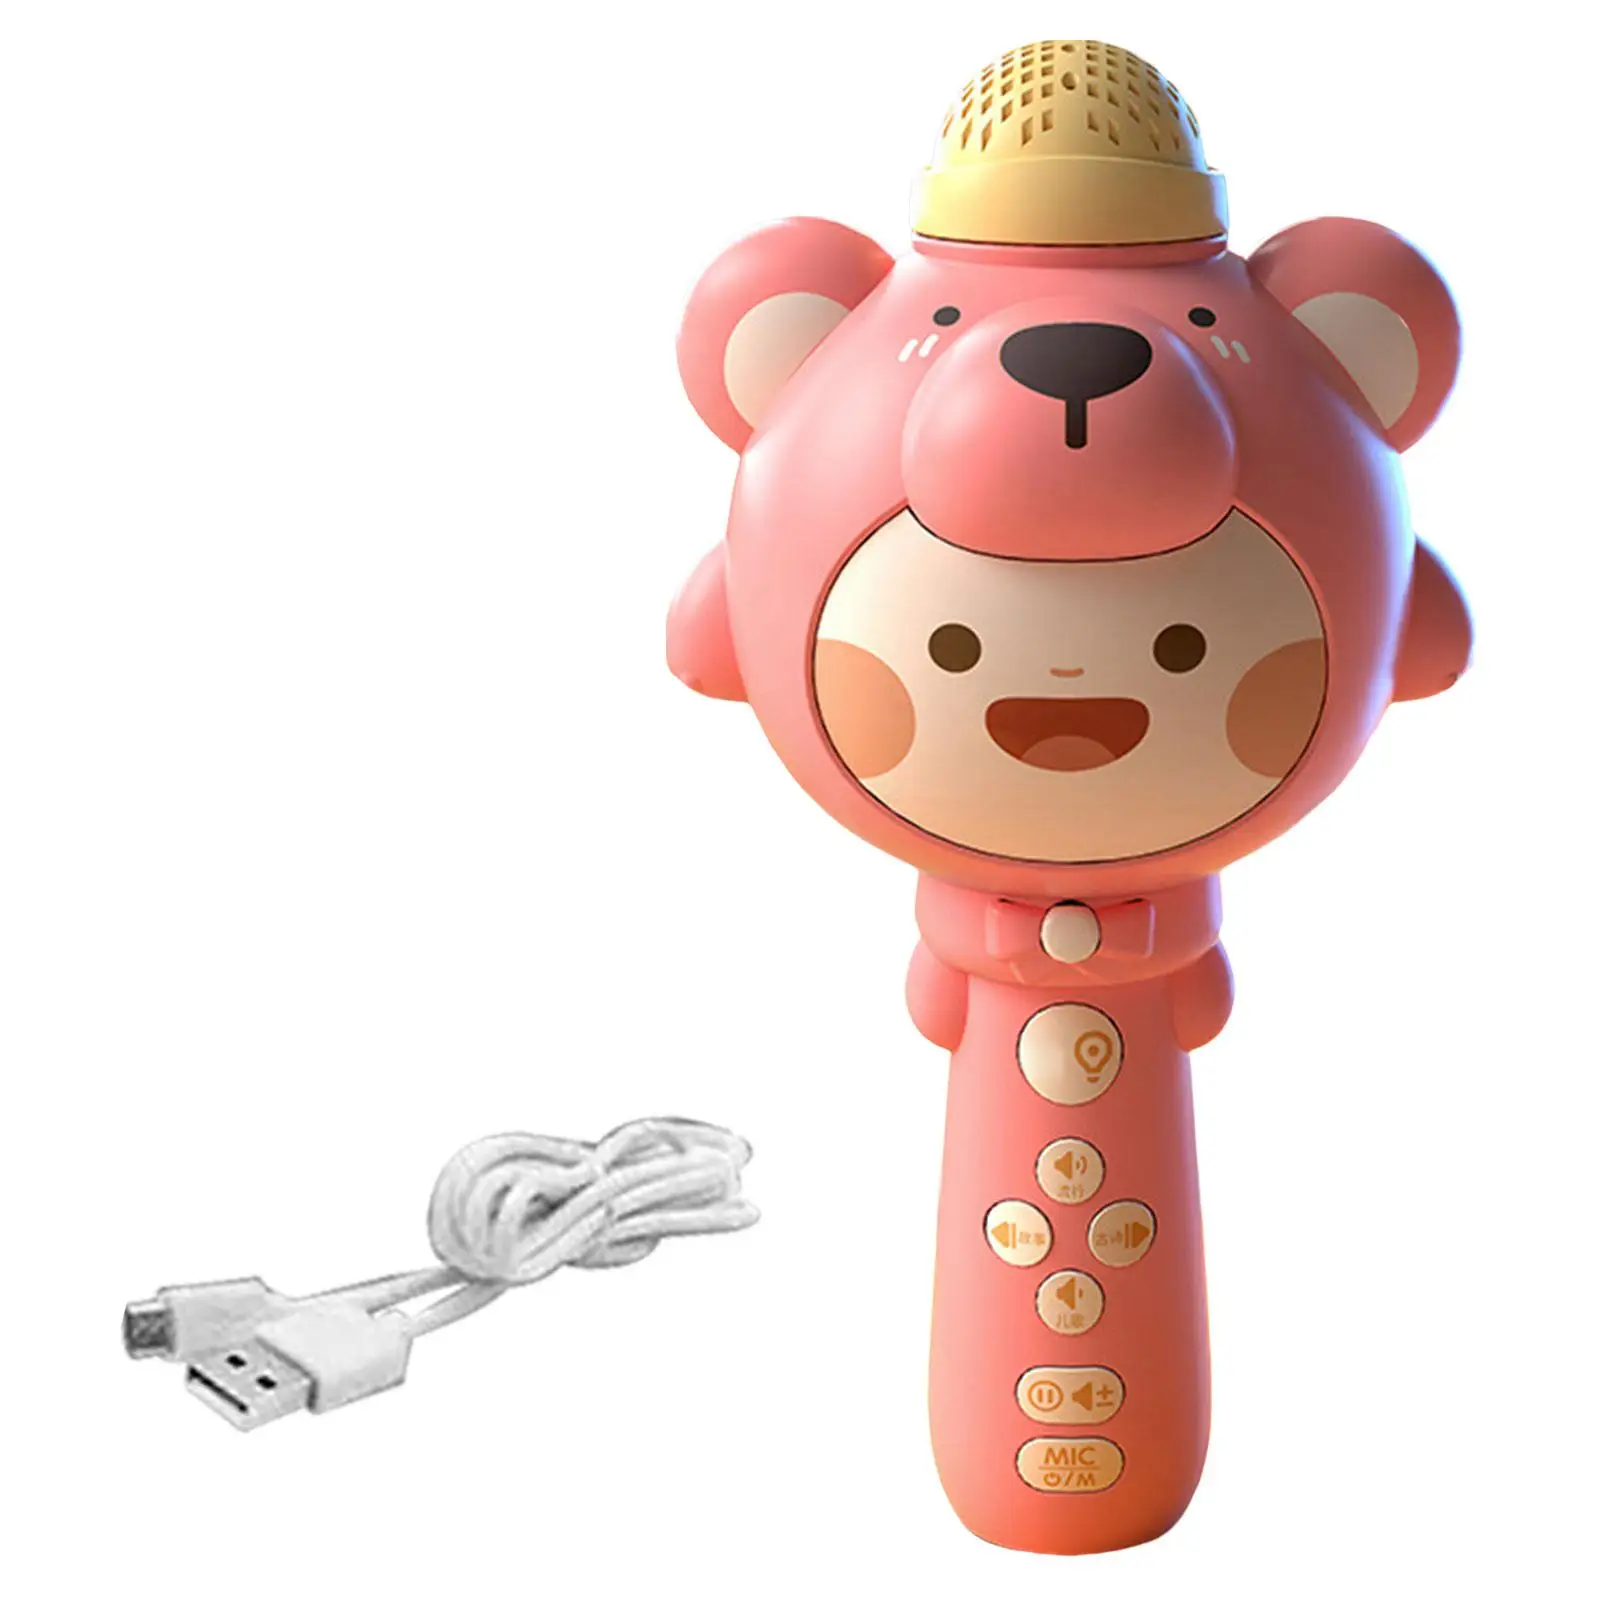 Handheld Mic Speaker Machine with LED Lights for Home KTV Girls Boys Toy